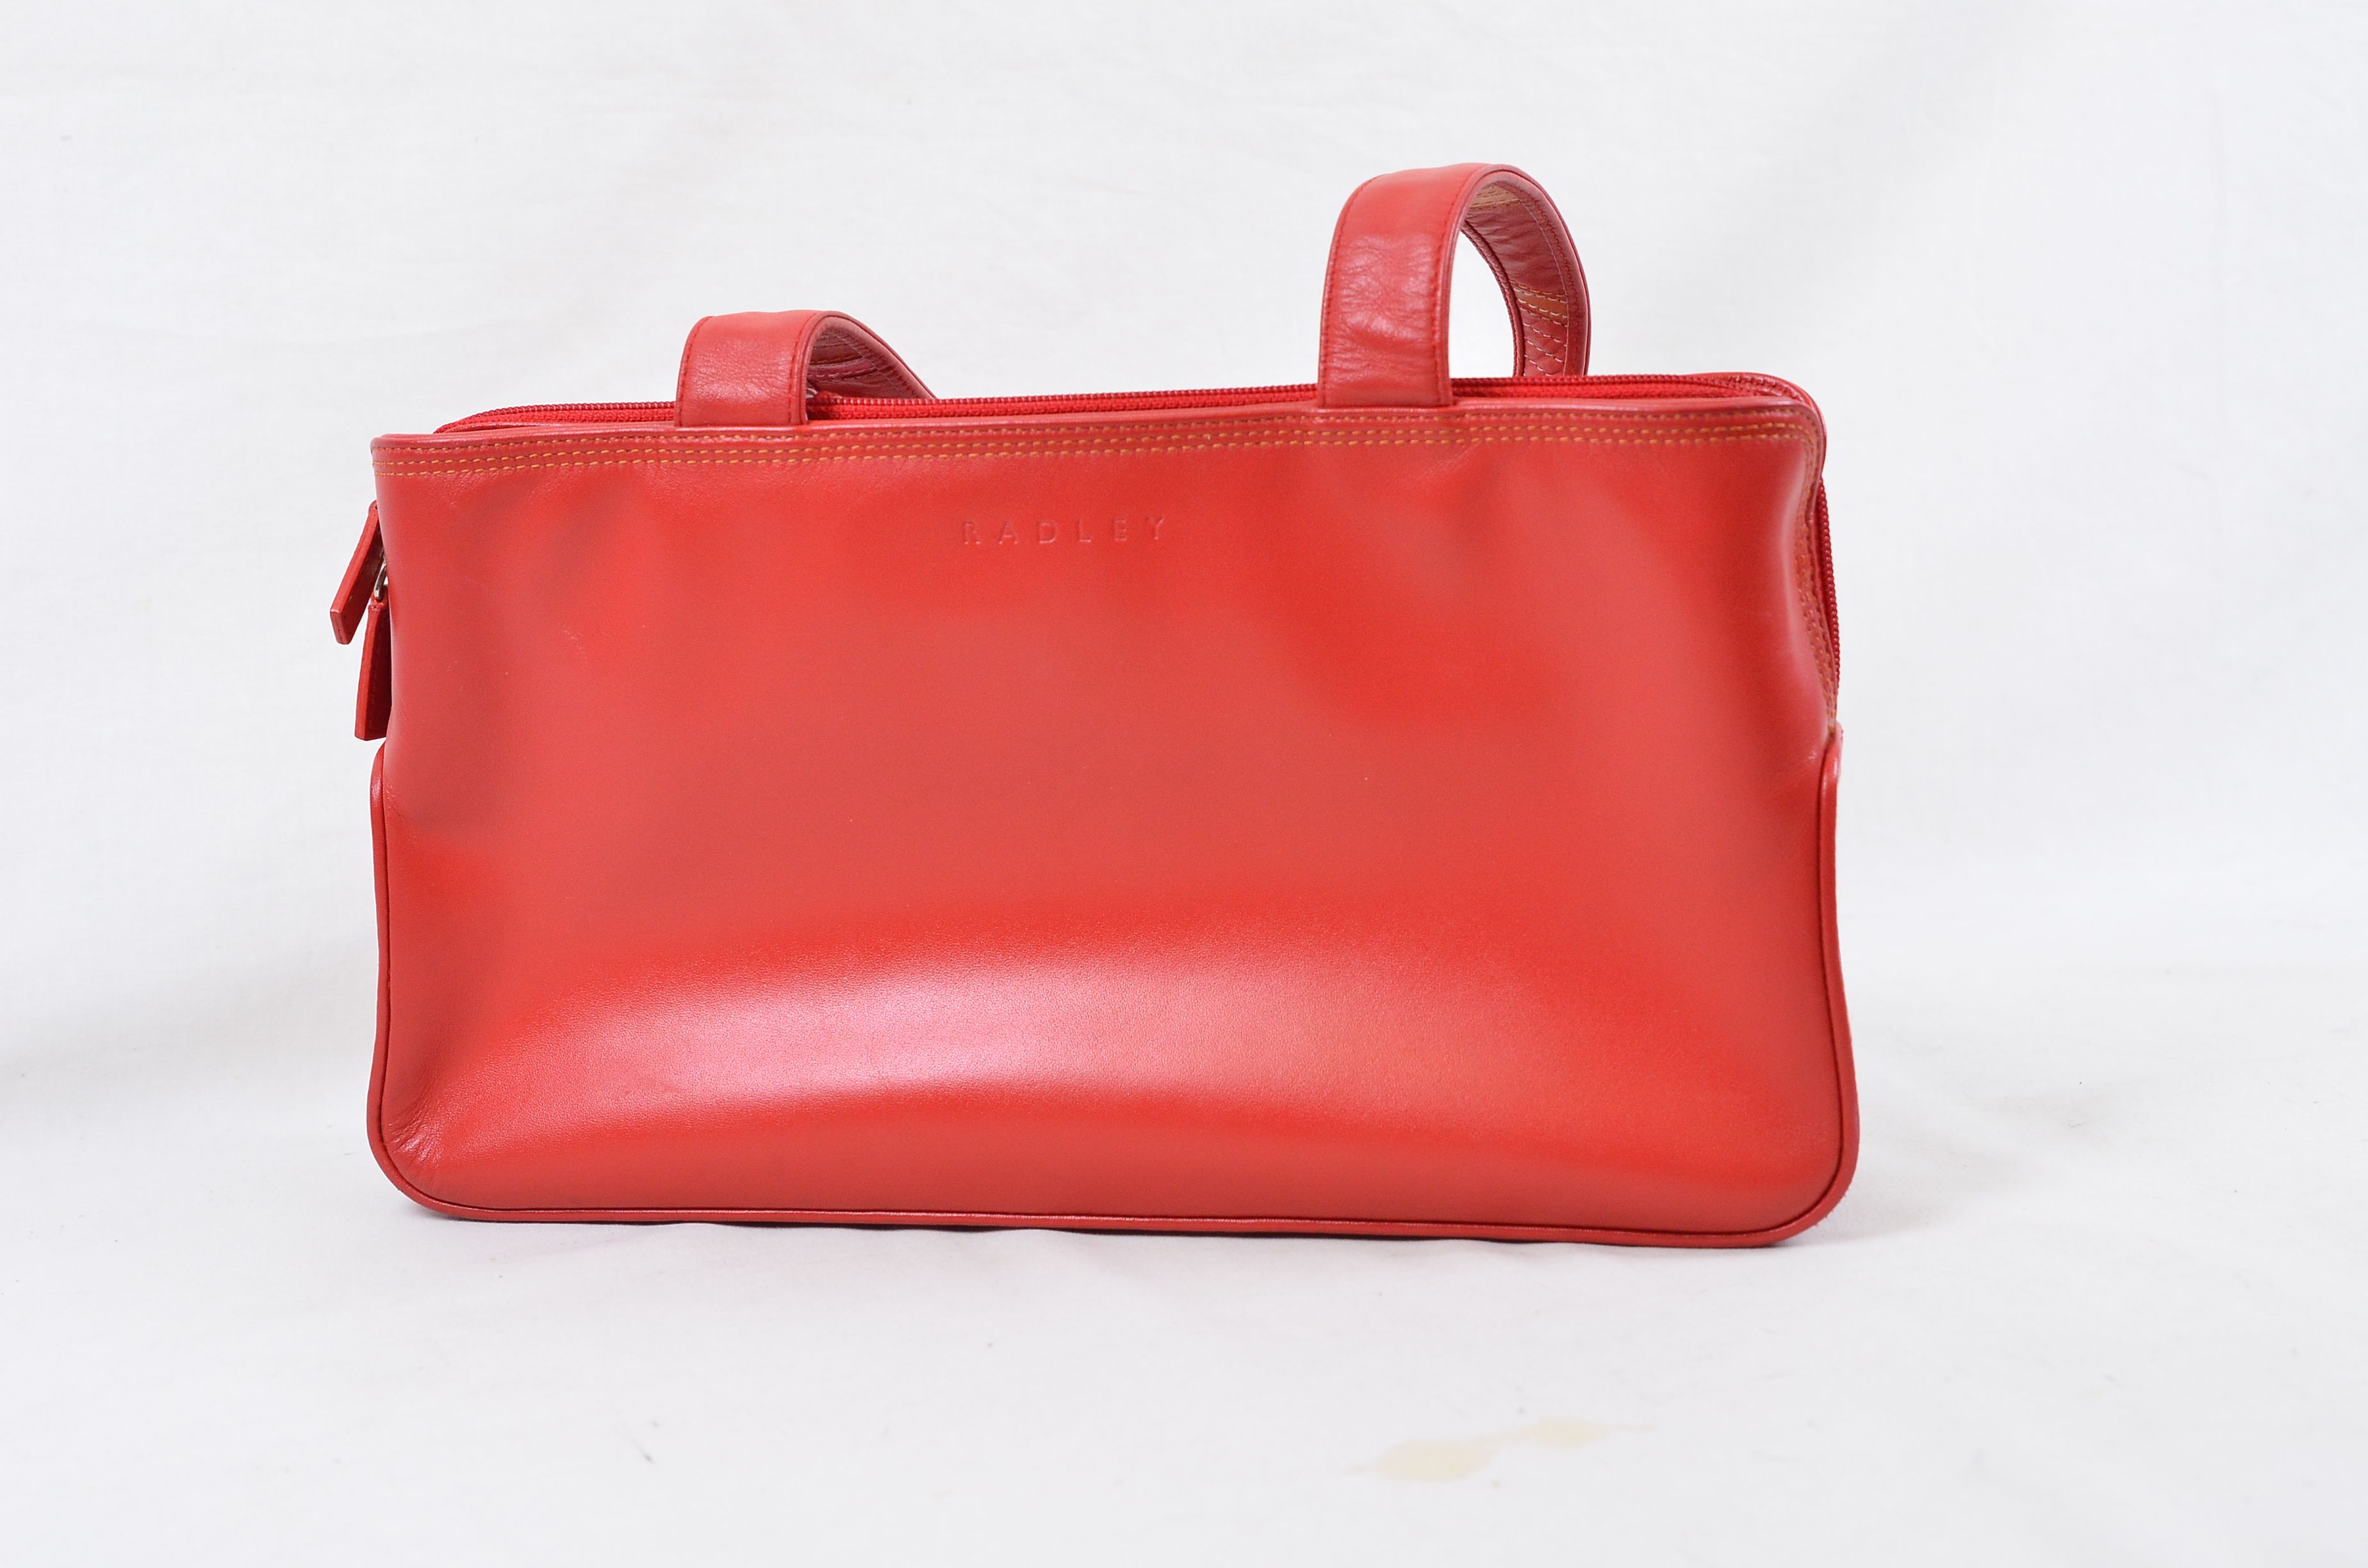 SOLD - Radley Red Leather Handbag Development Sample | ARHC eBay Store